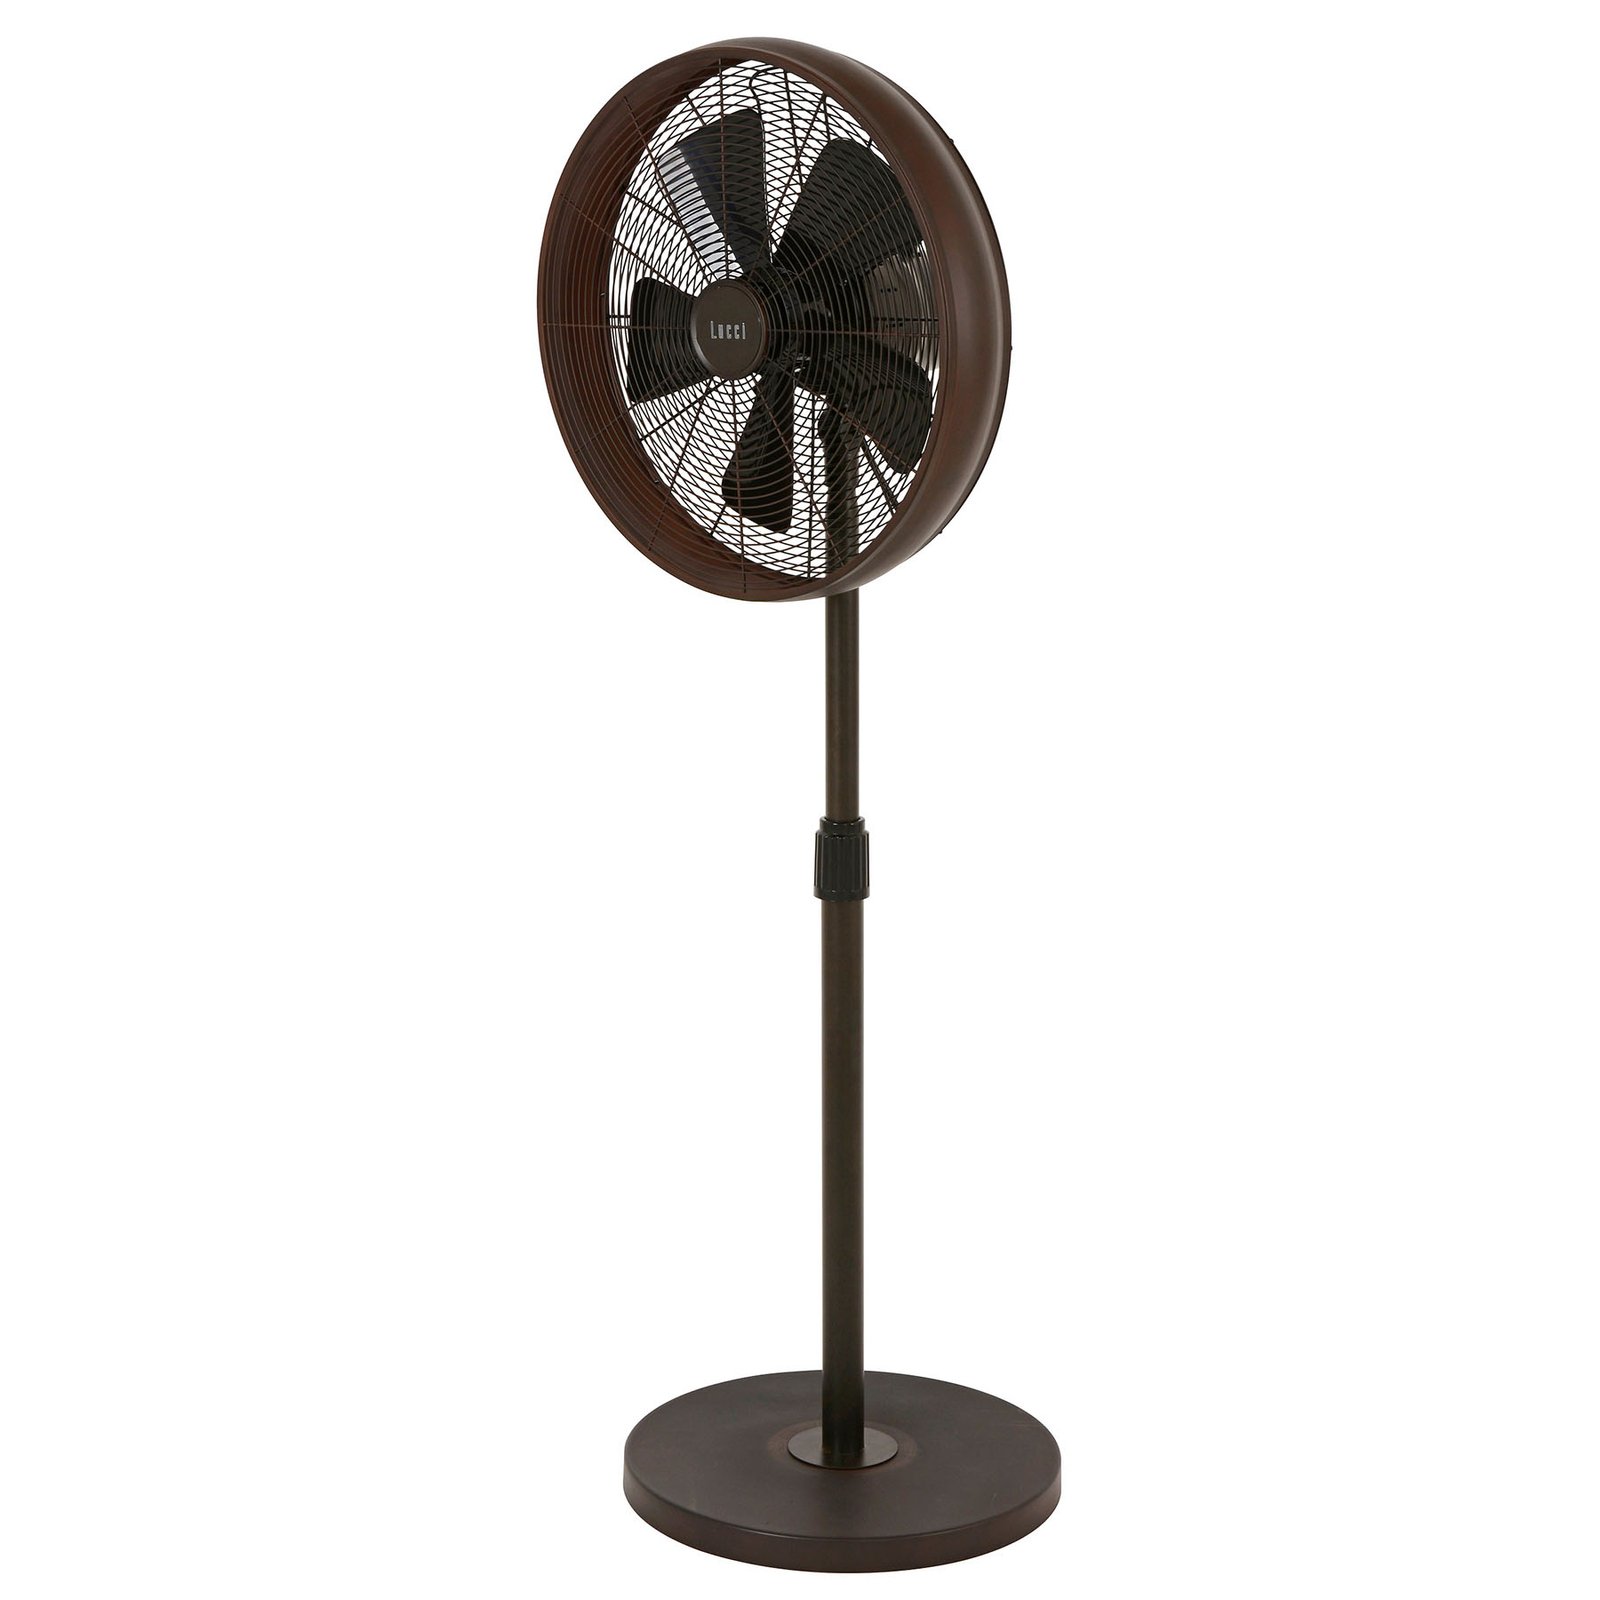 Breeze gulvventilator, 122 cm, rund fod, bronze